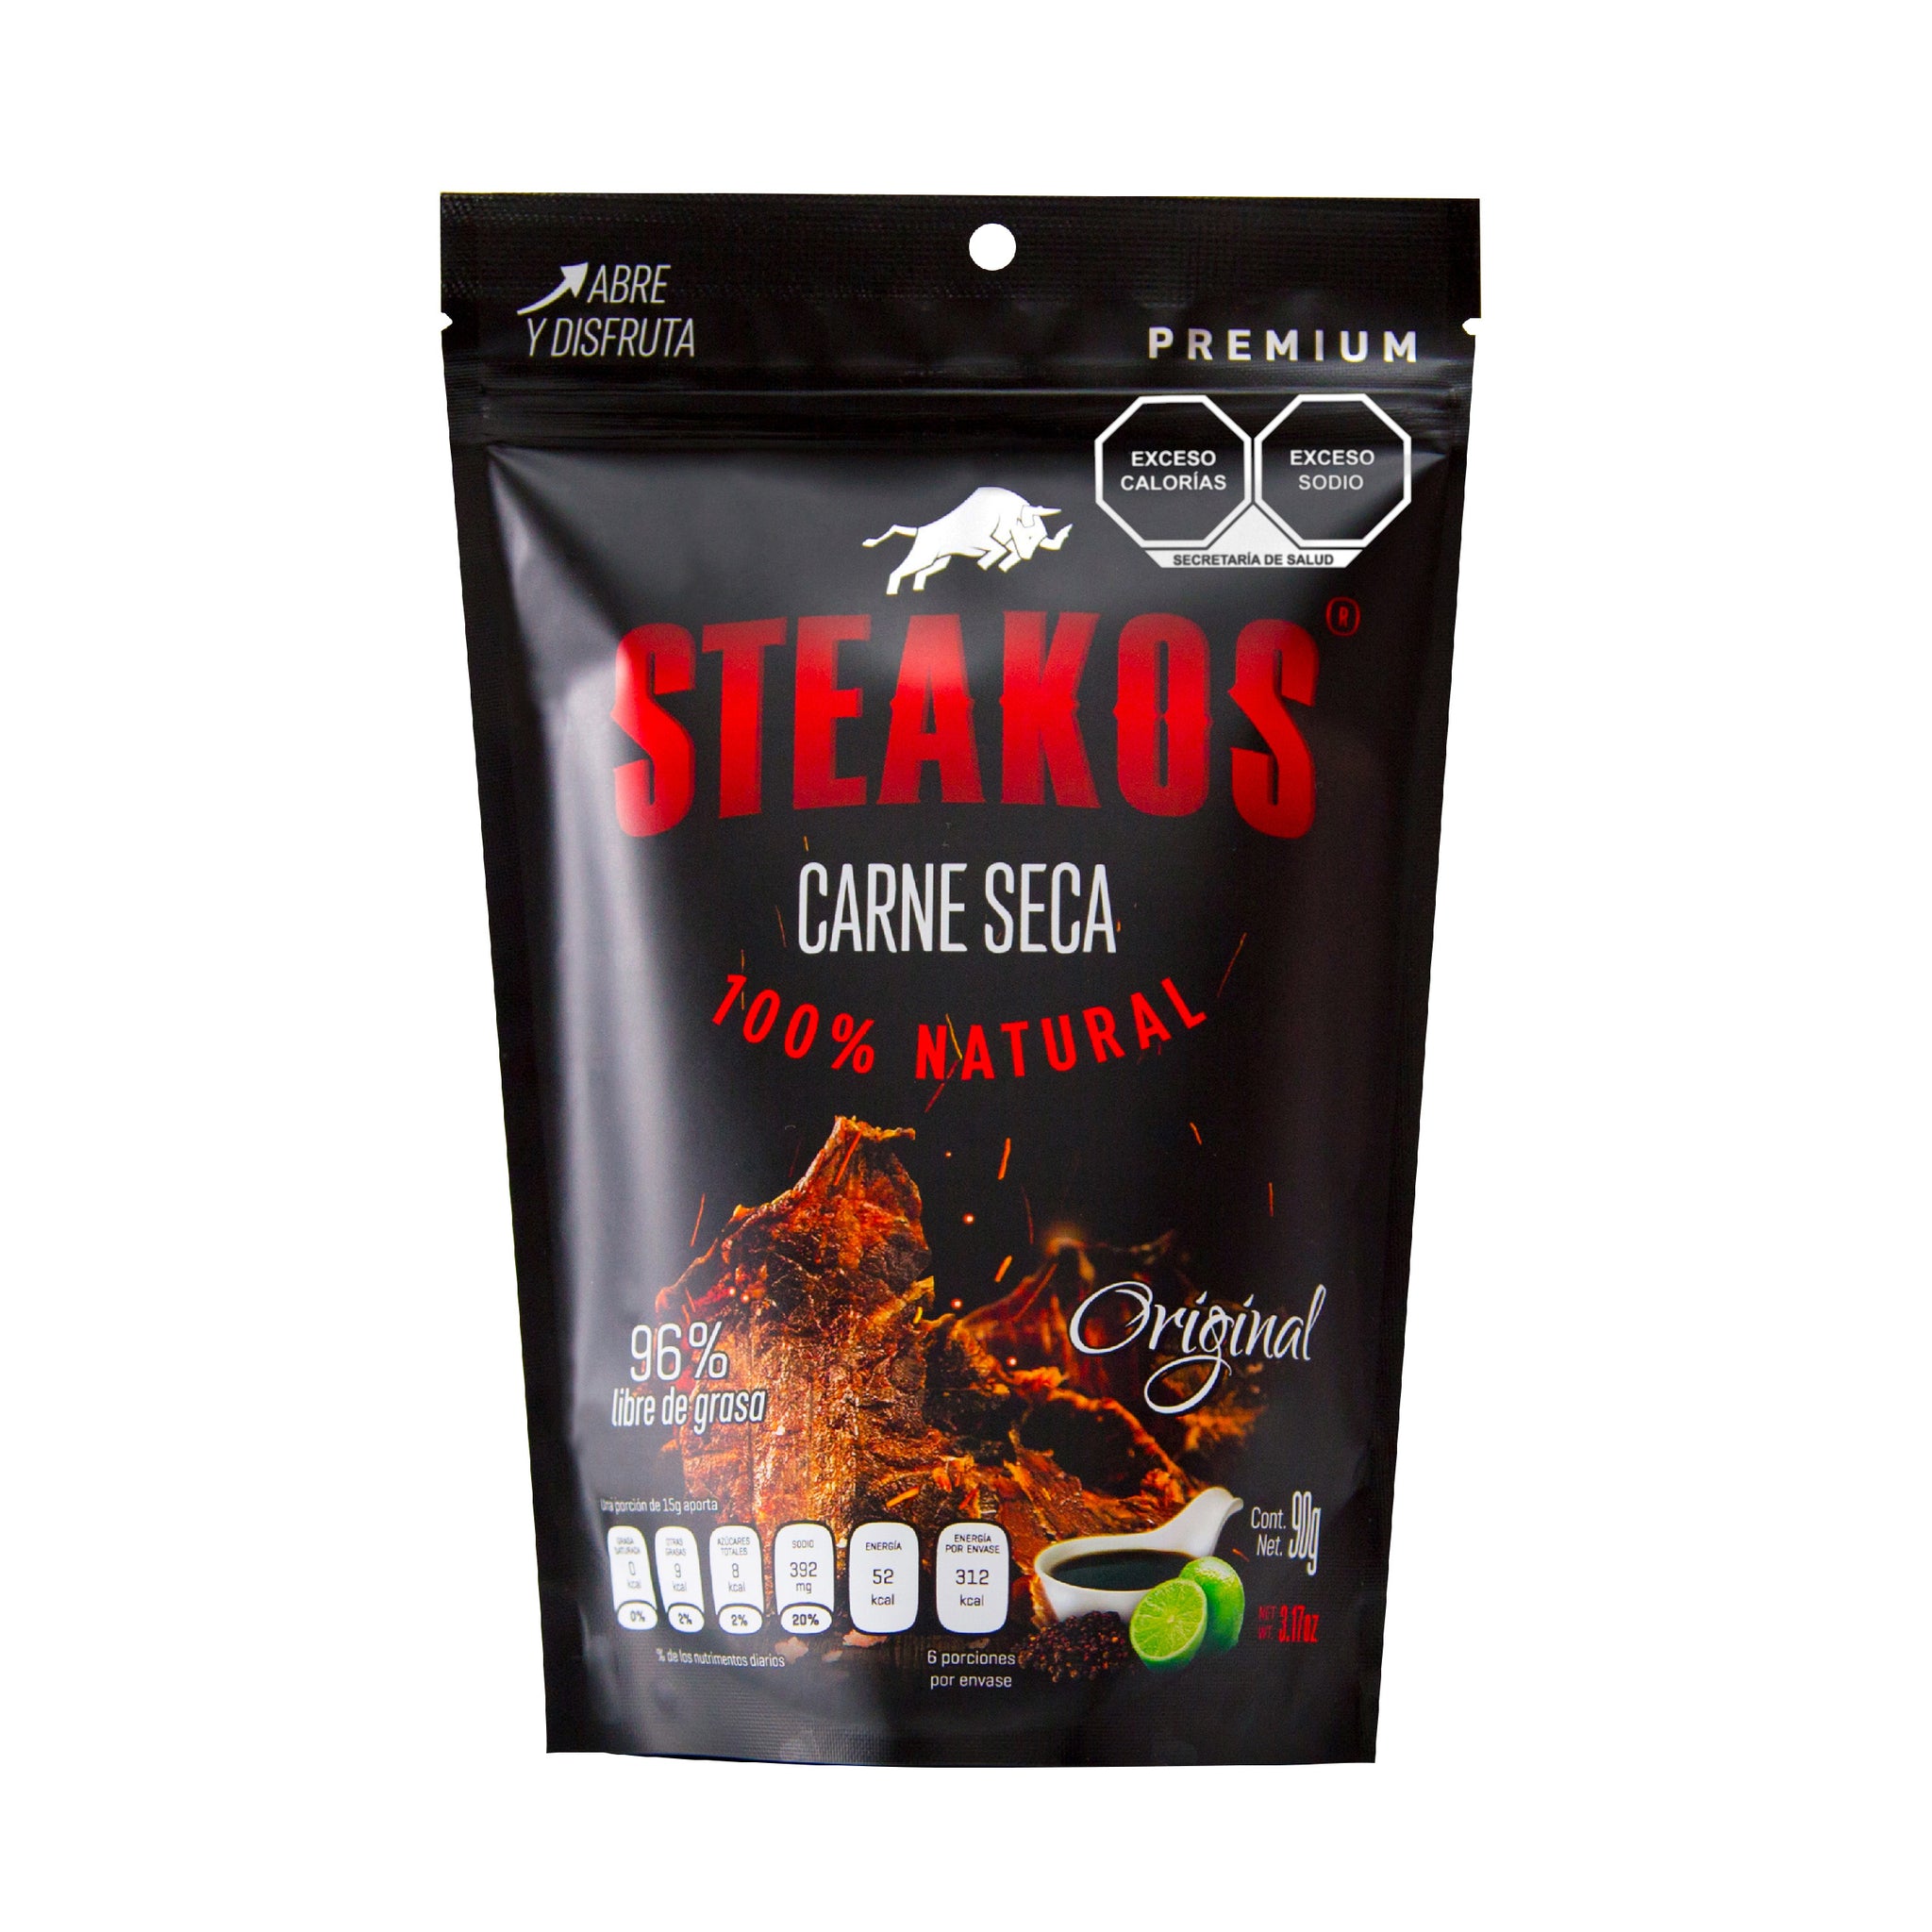 Carne seca Steakos 90 g